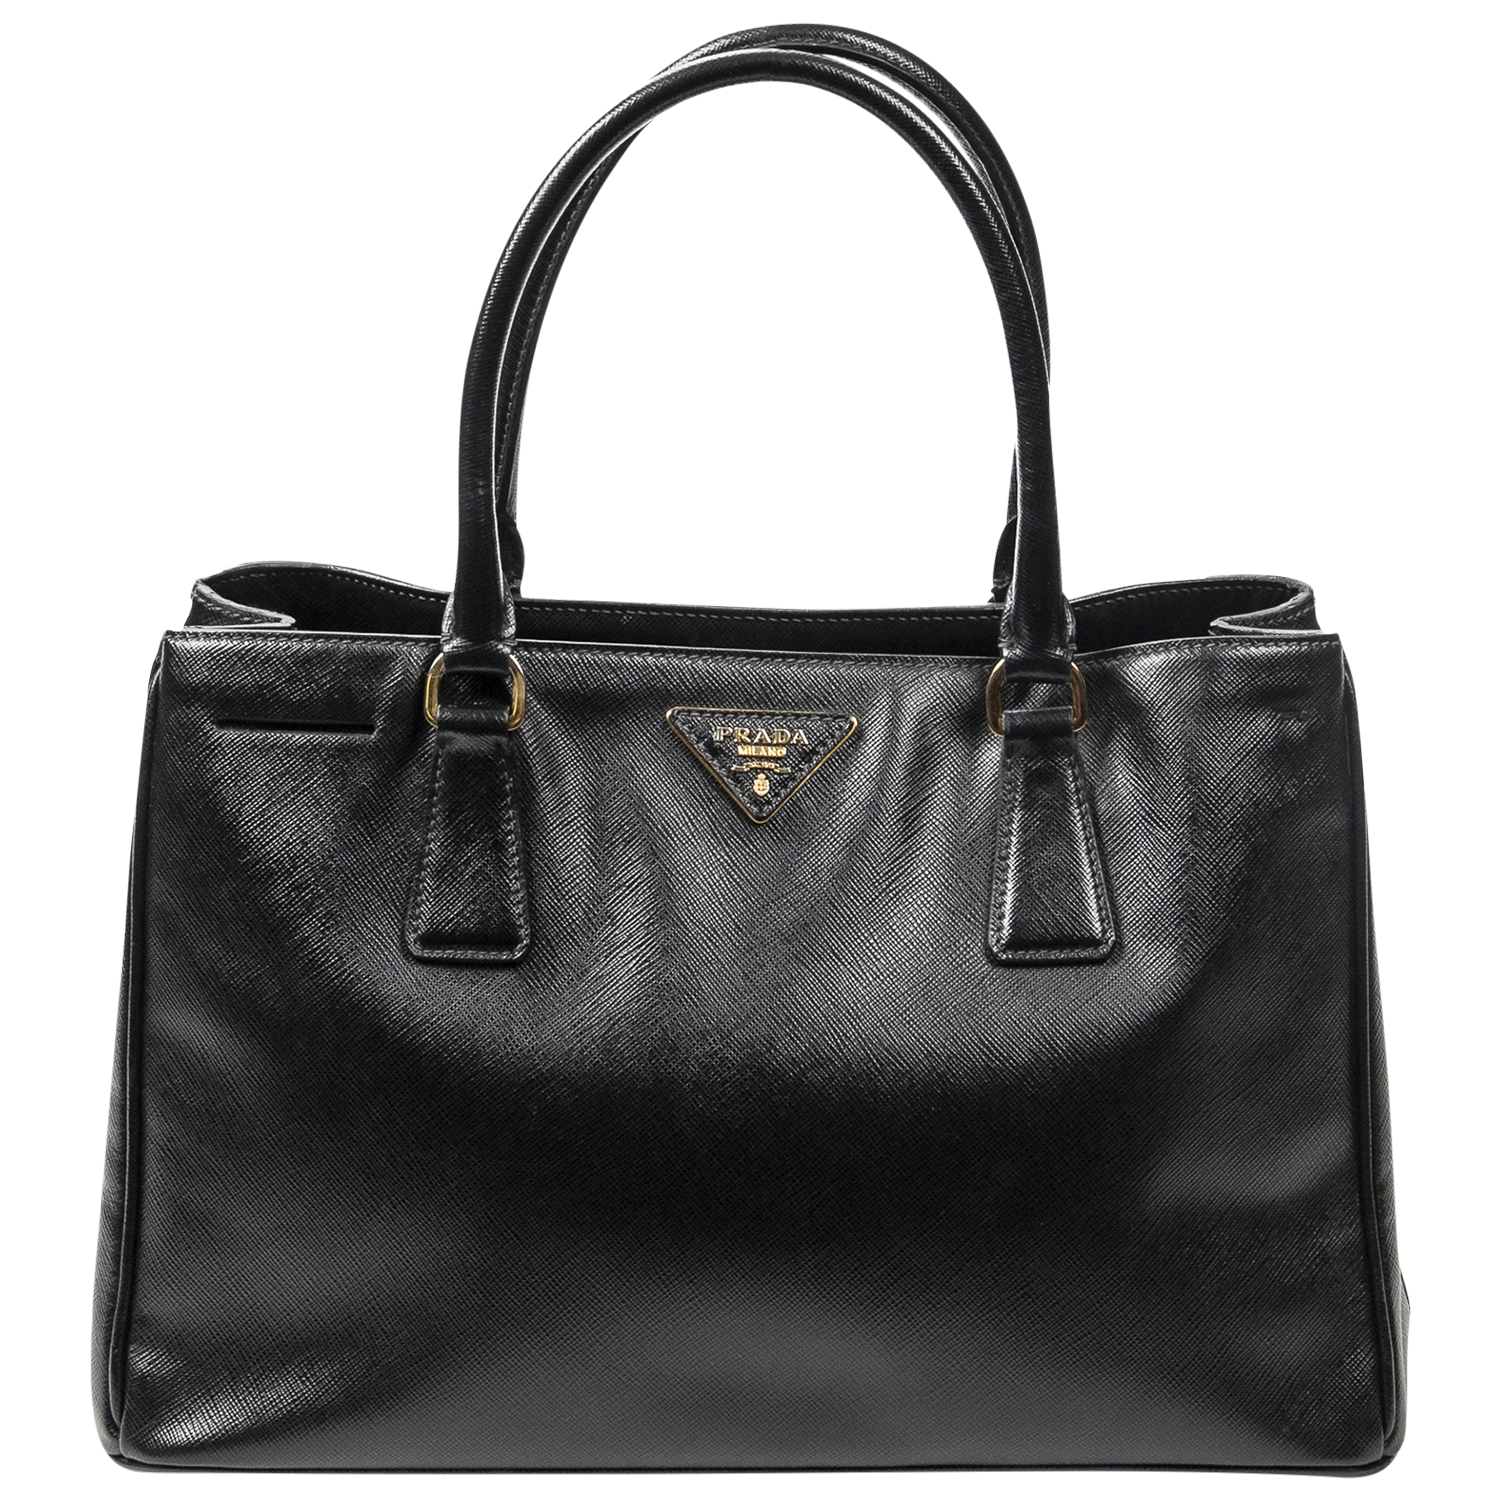 Prada Large Black Saffiano Leather Bag w/ Strap